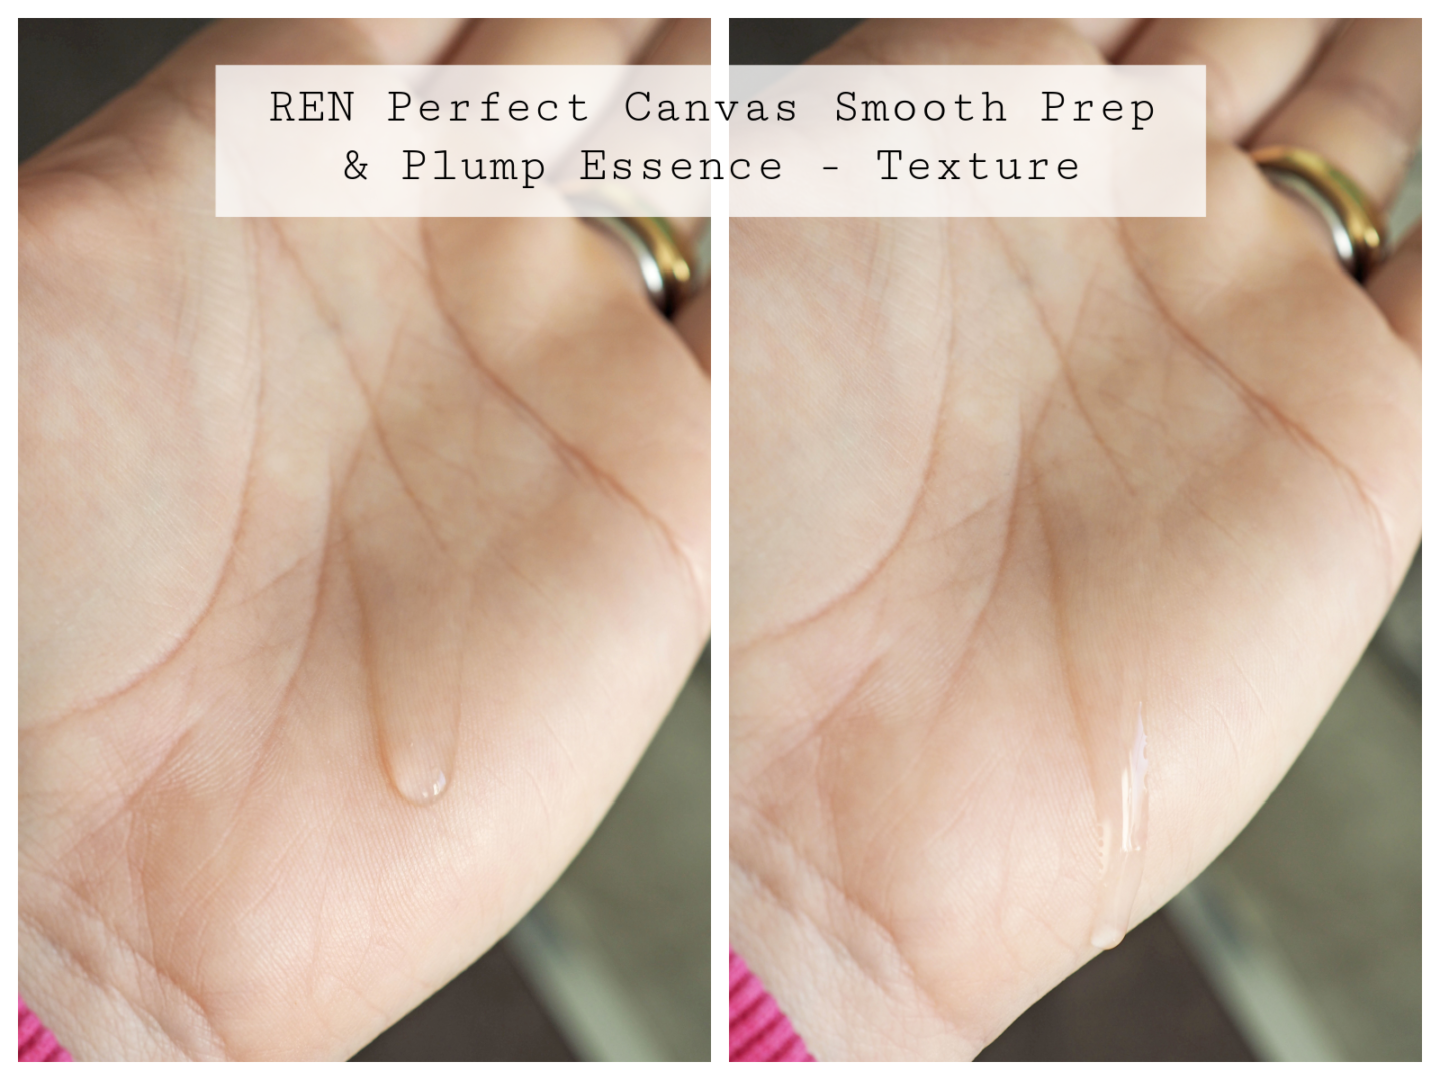 REN smooth prep & plump essence review